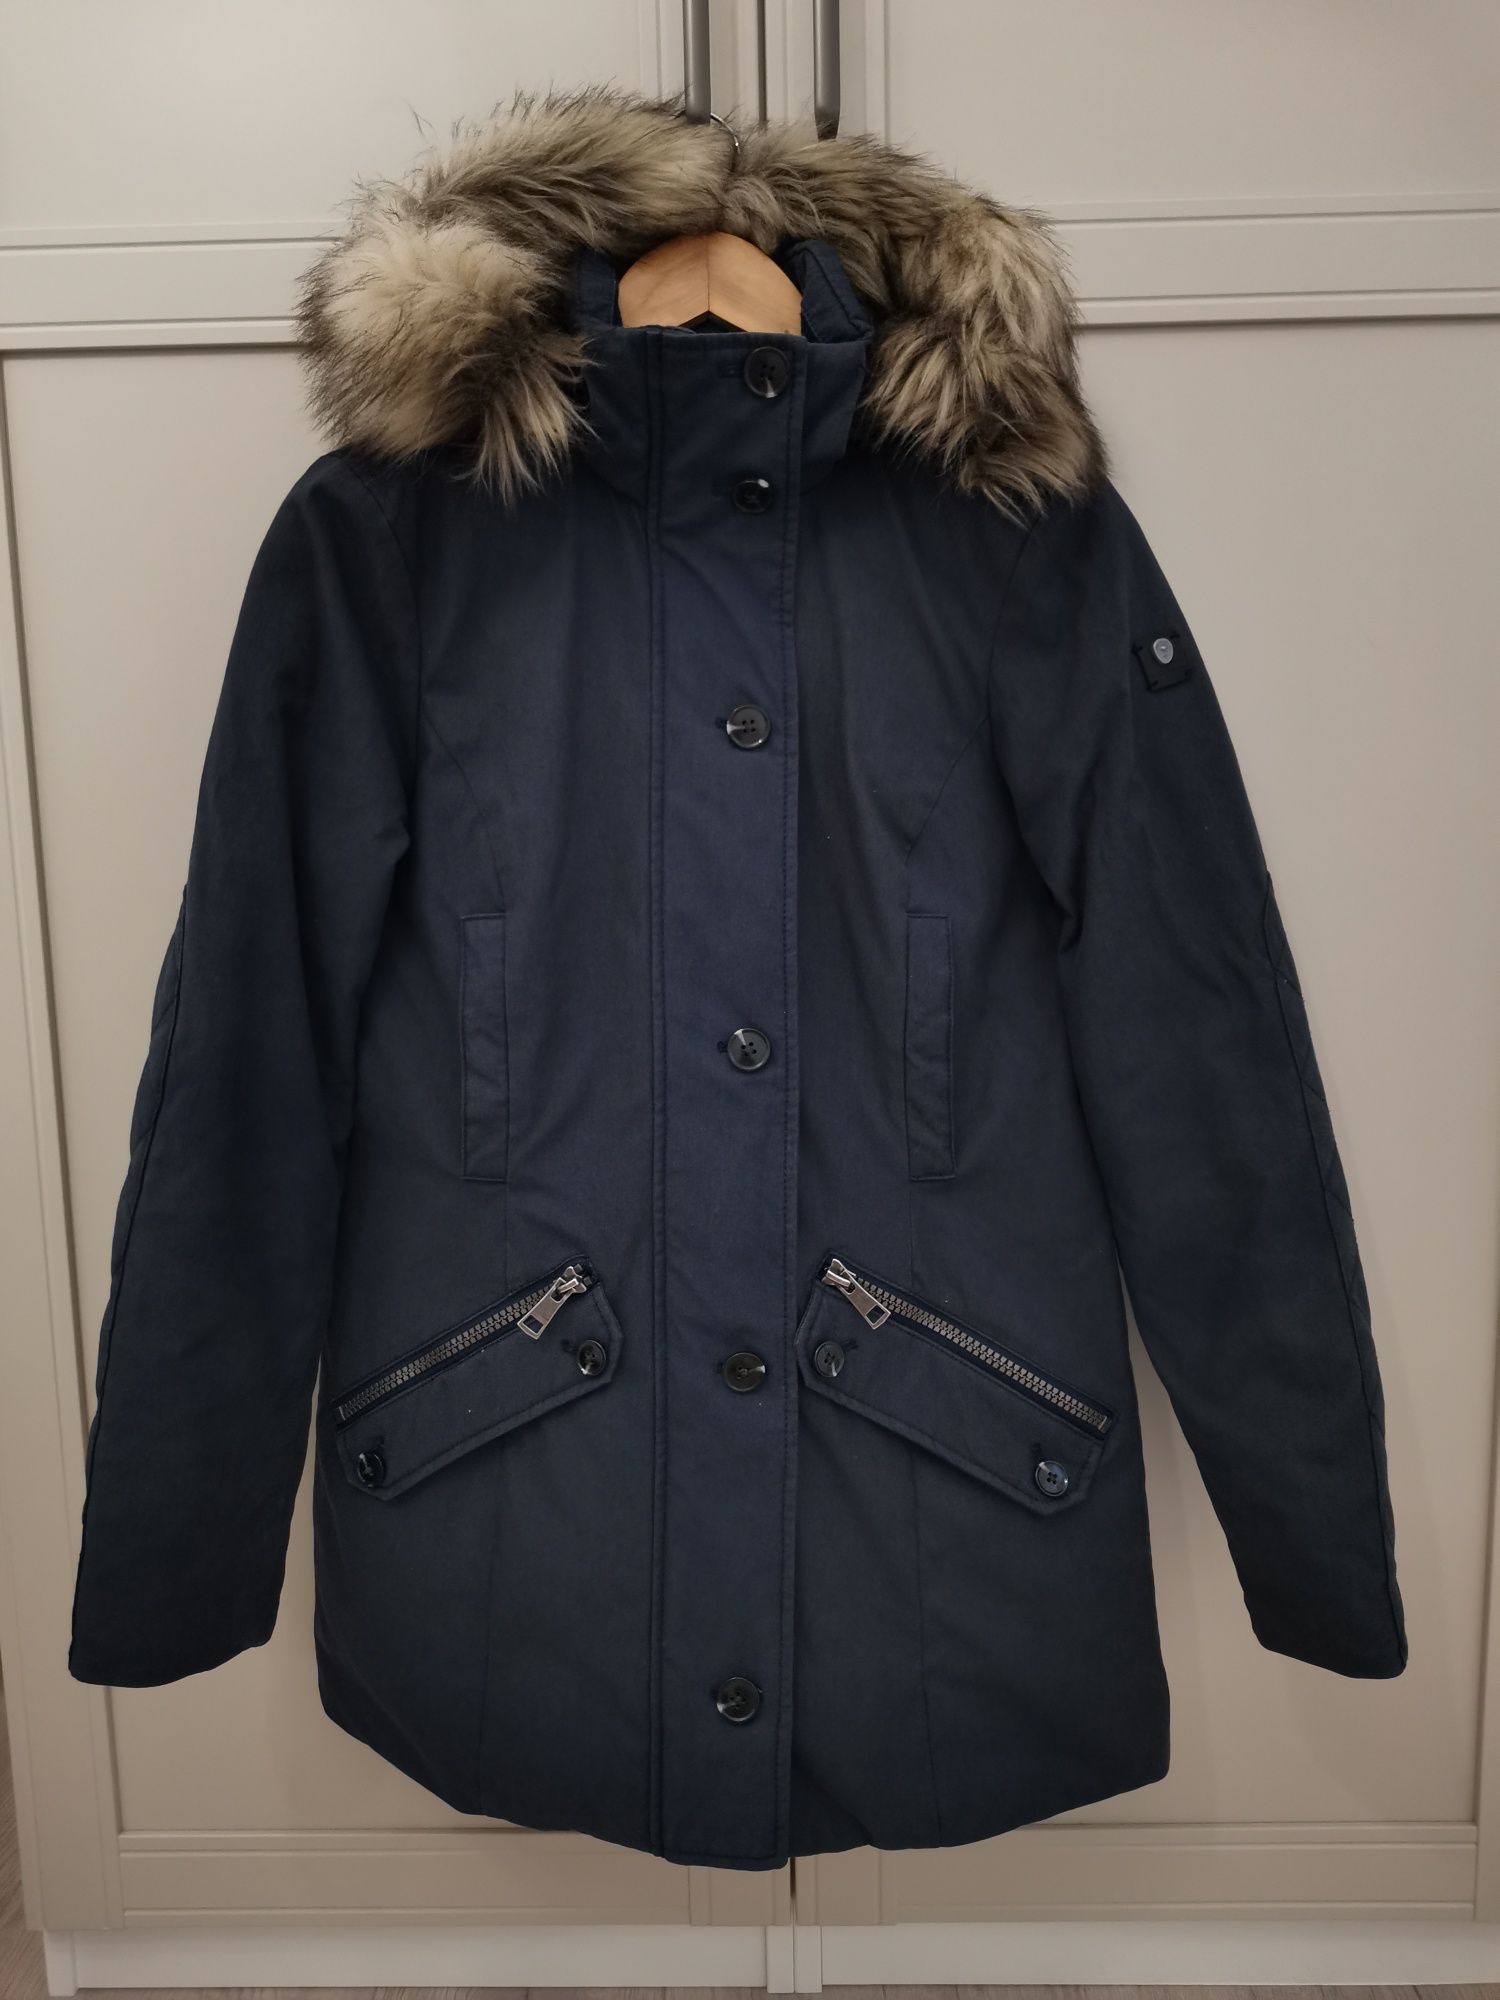 Парка куртка курточка зимняя женская Tom Tailor  размер s m